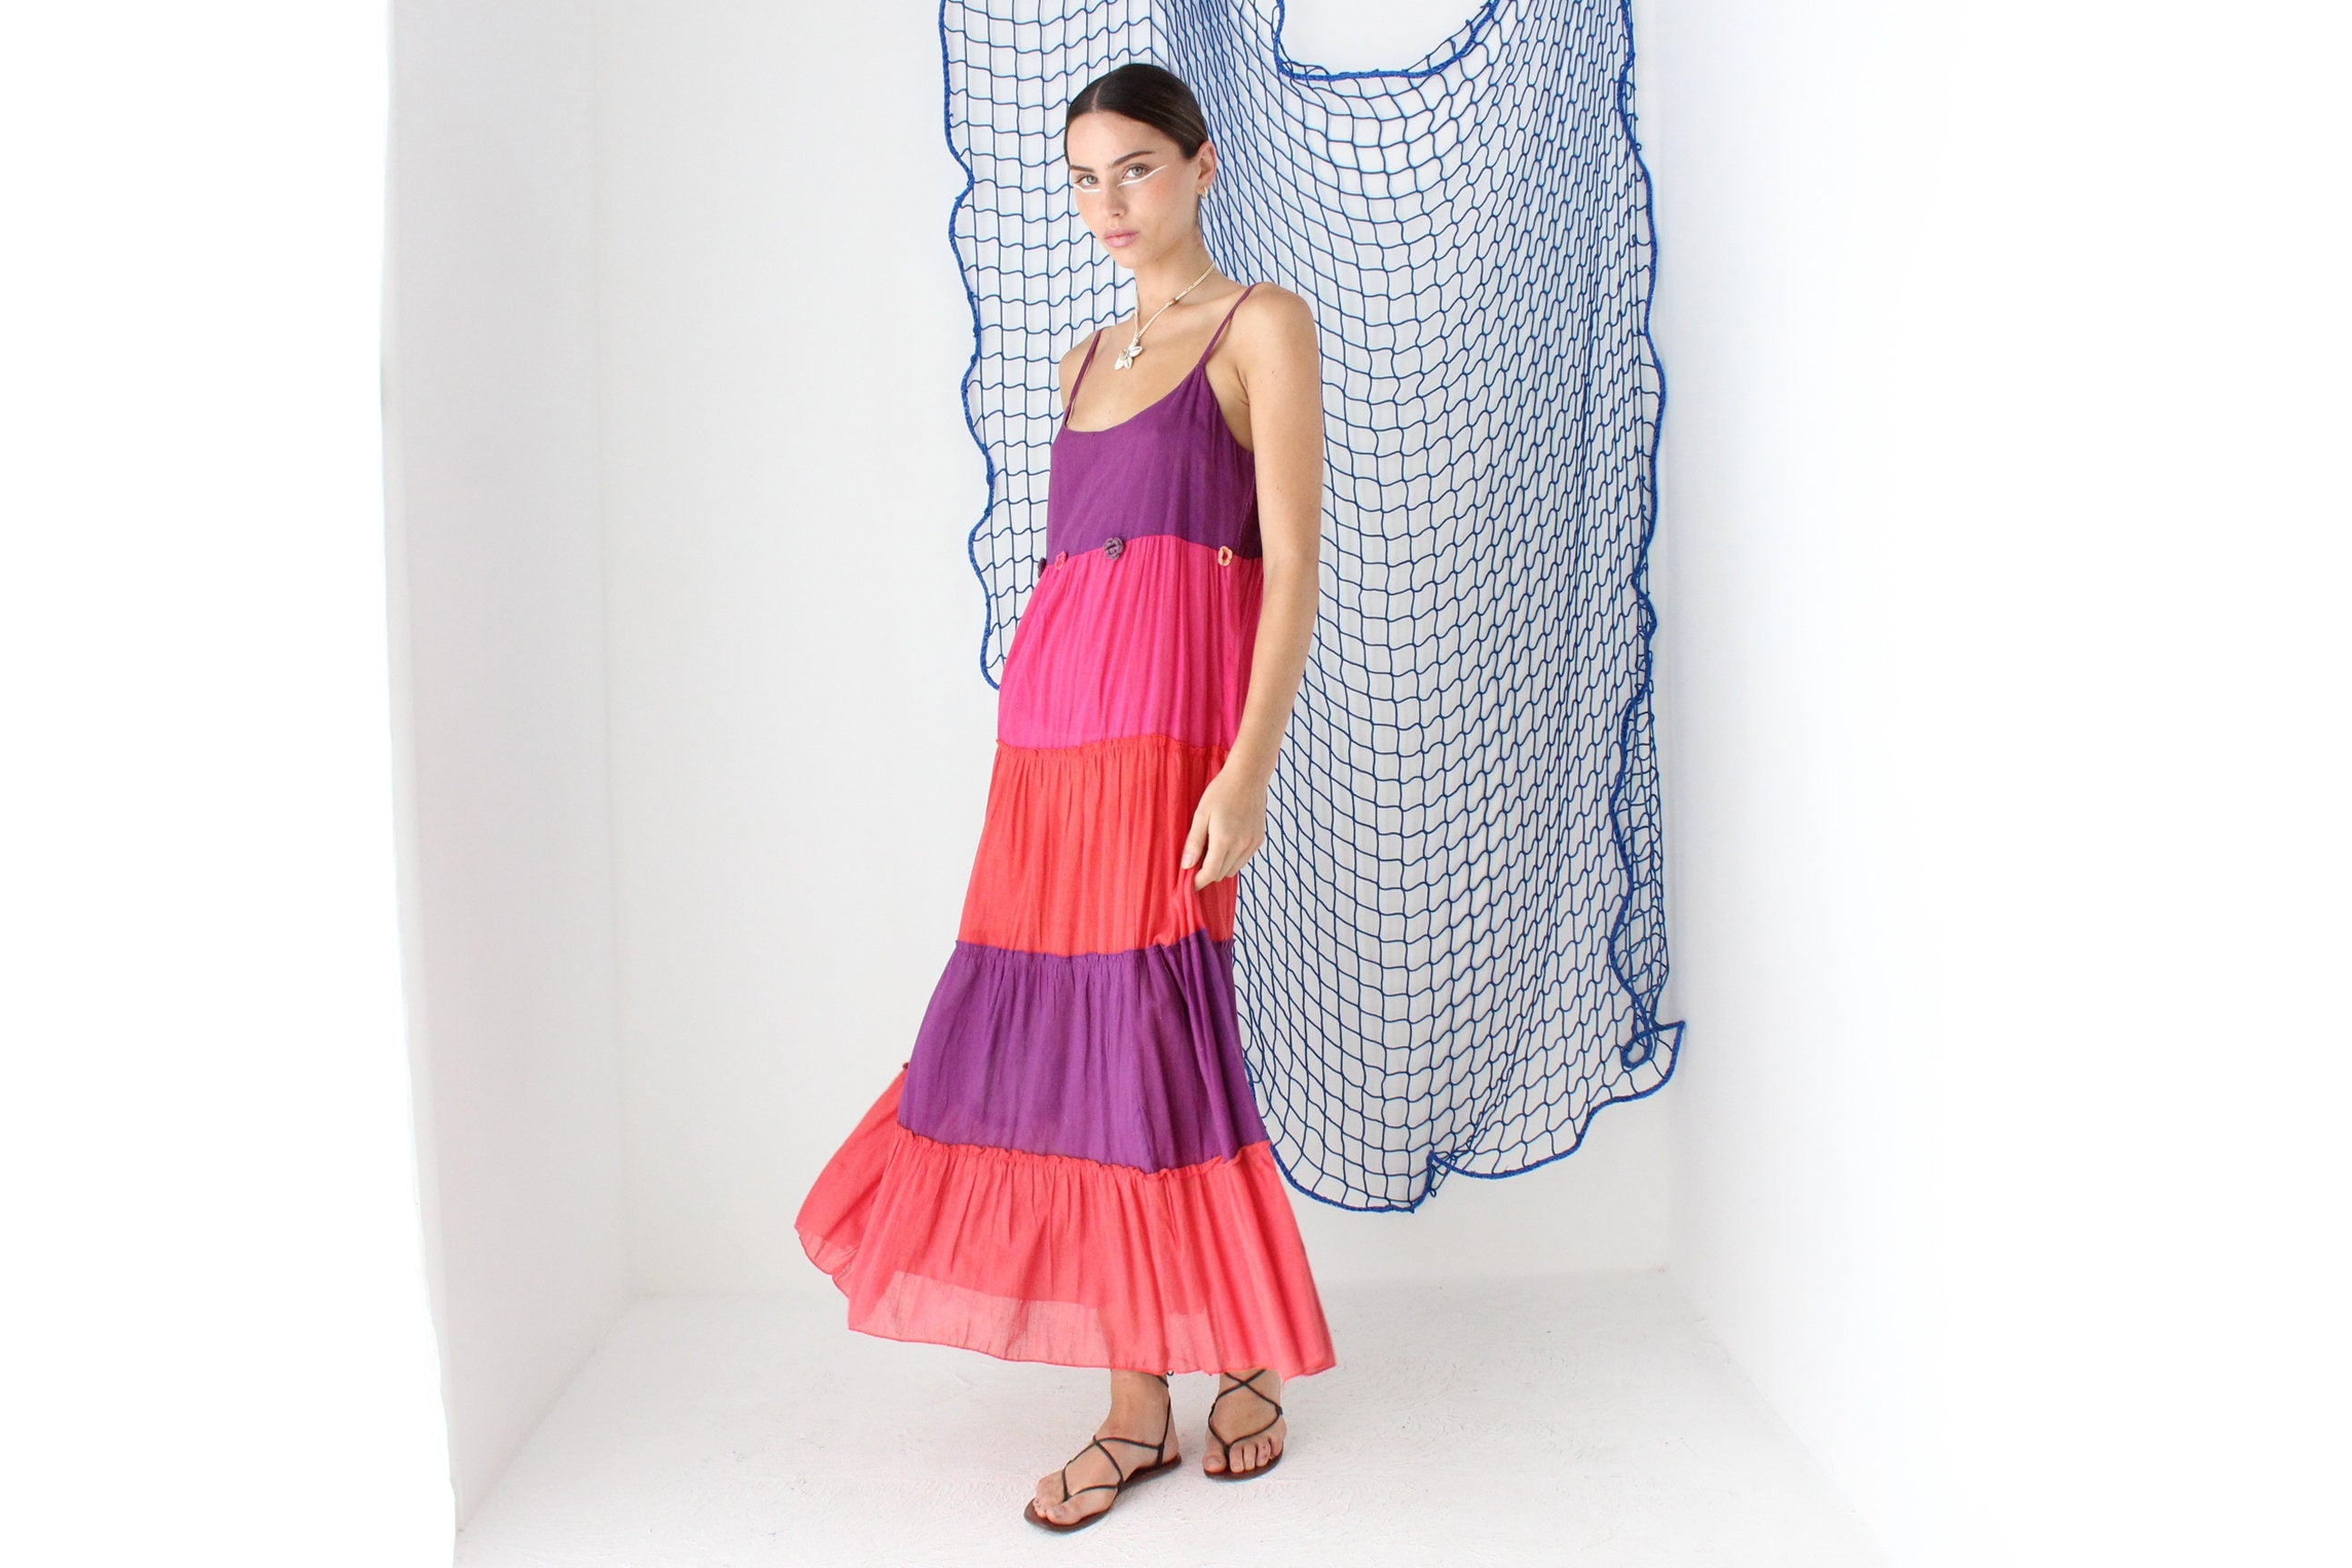 FOUND IN GREECE 90s Tiered Cotton Gauze Dress